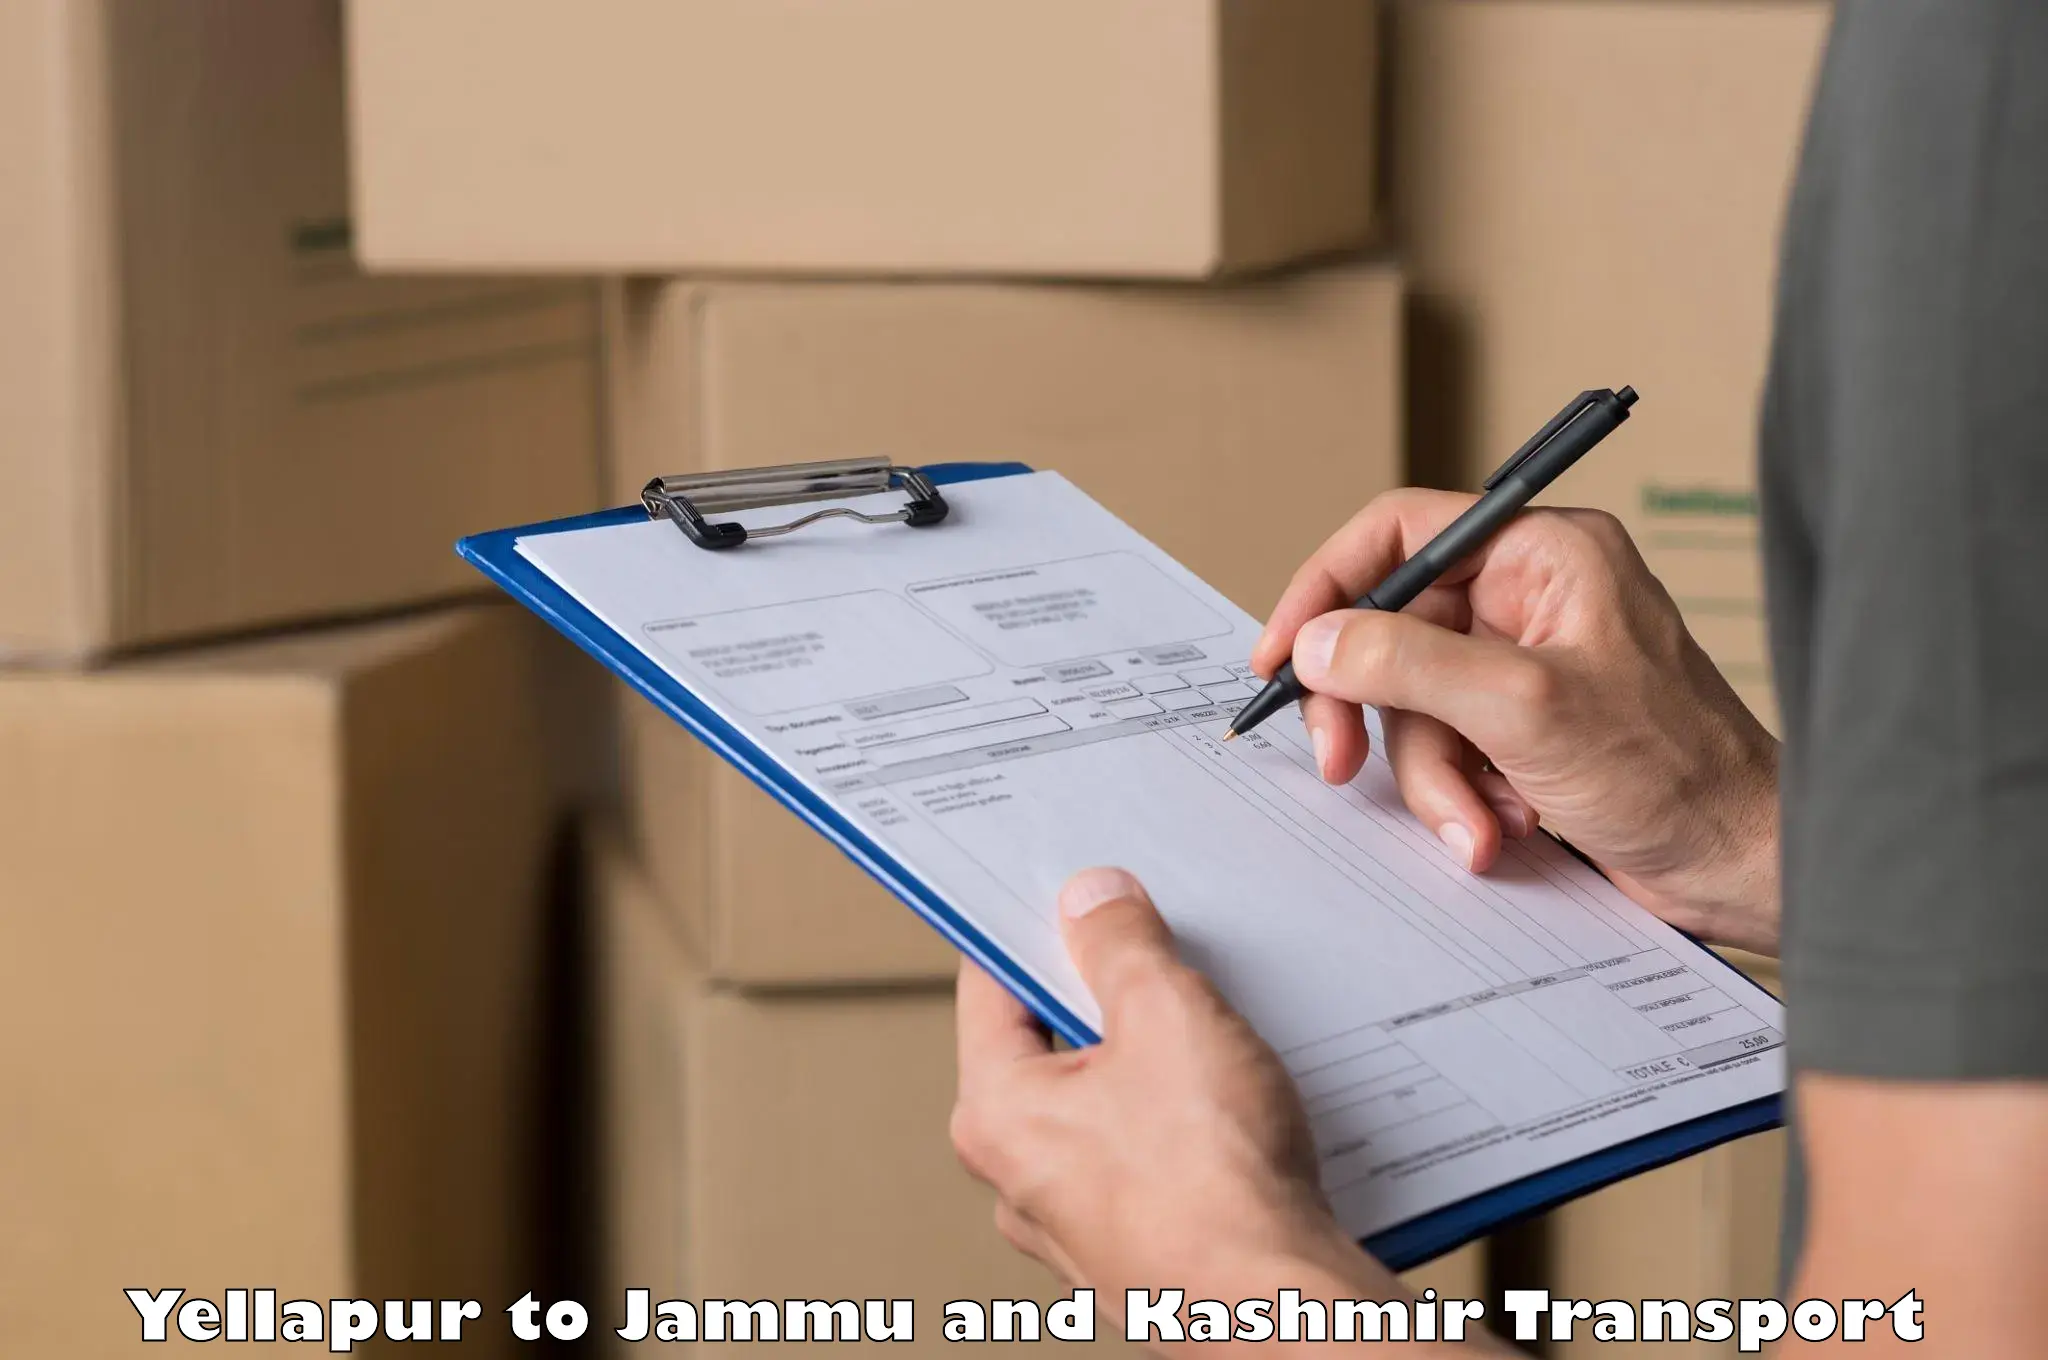 Transport in sharing Yellapur to Jammu and Kashmir